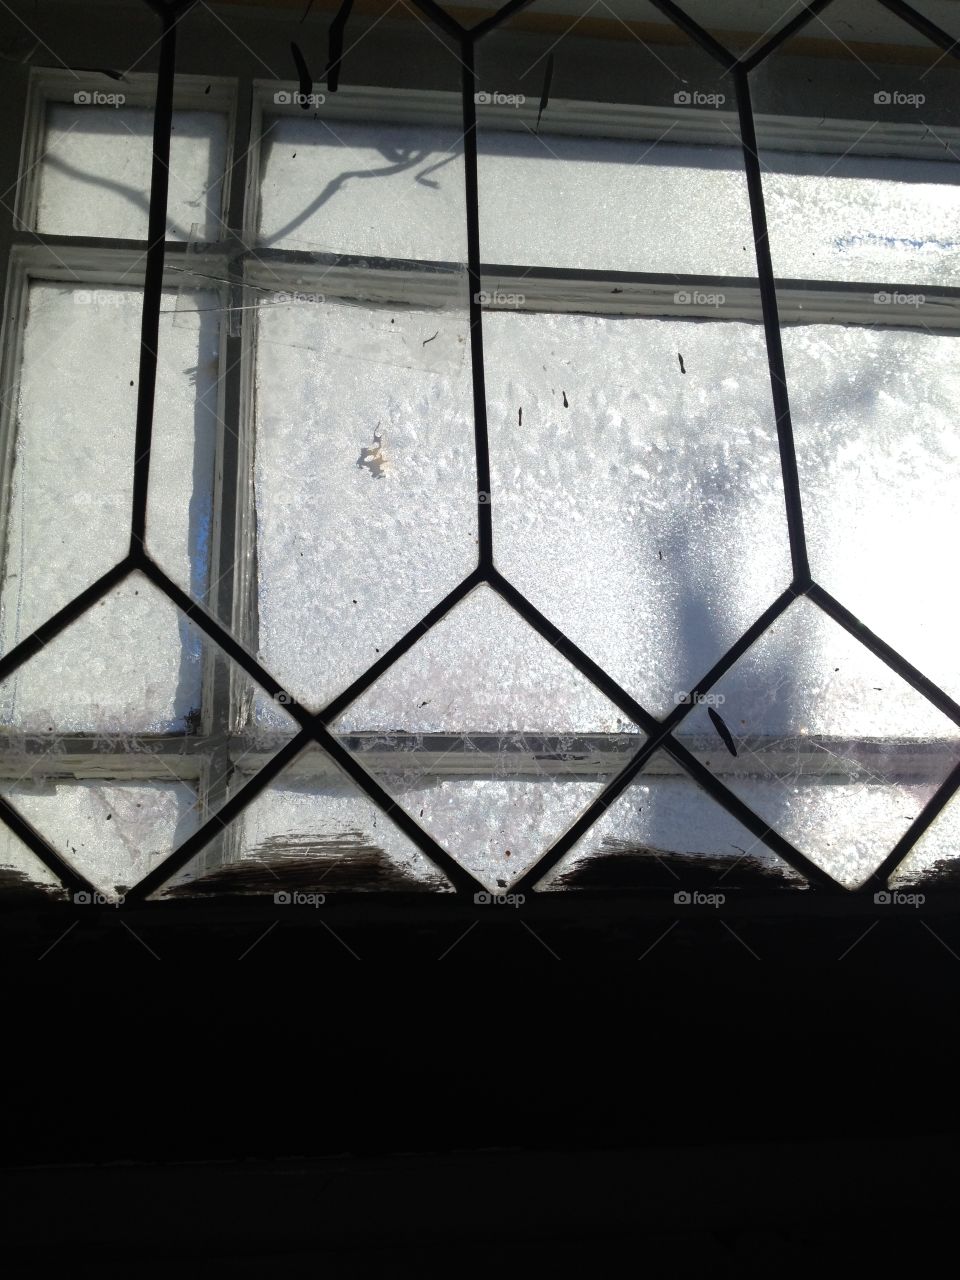 Snow window